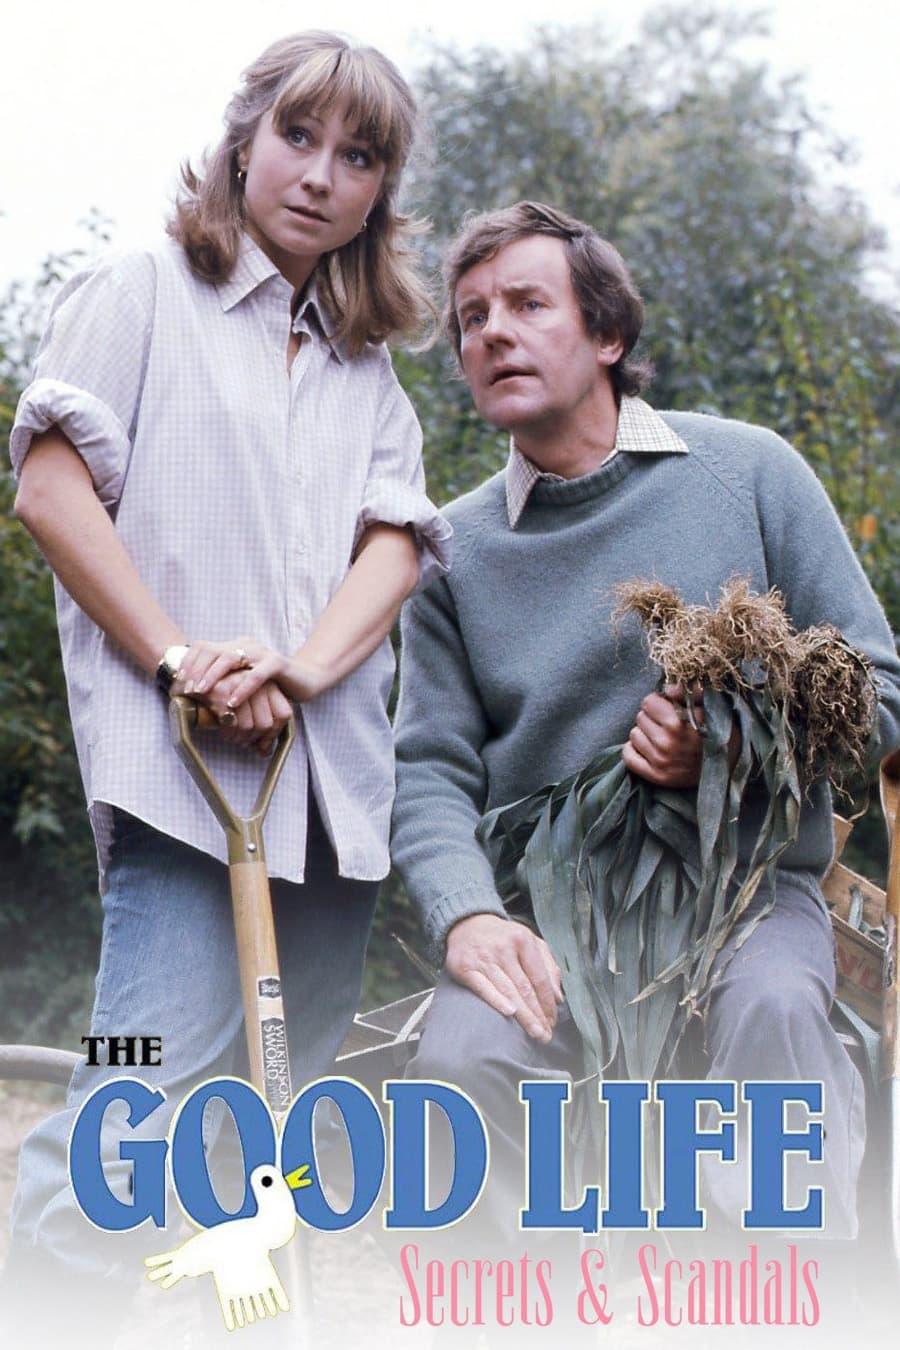 The Good Life: Secret & Scandals poster